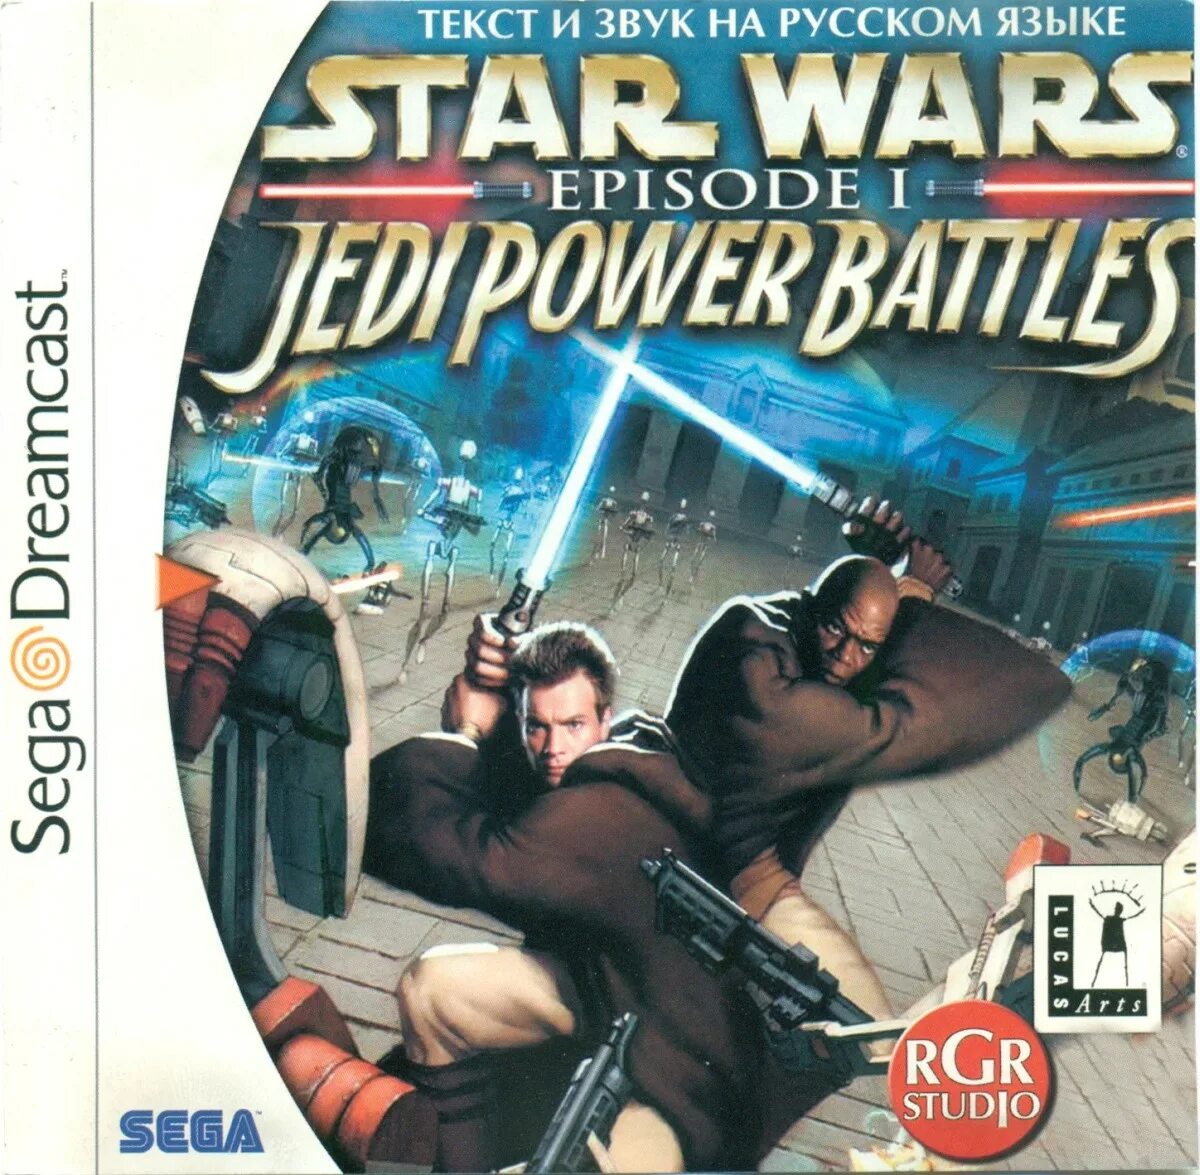 Star wars episode i jedi power. Sega Dreamcast Star Wars Episode 1. Star Wars Episode 1 Jedi Power Battles. Star Wars Episode i Jedi Power Battles ps1. Star Wars Jedi Power Battles ps1 Disc.